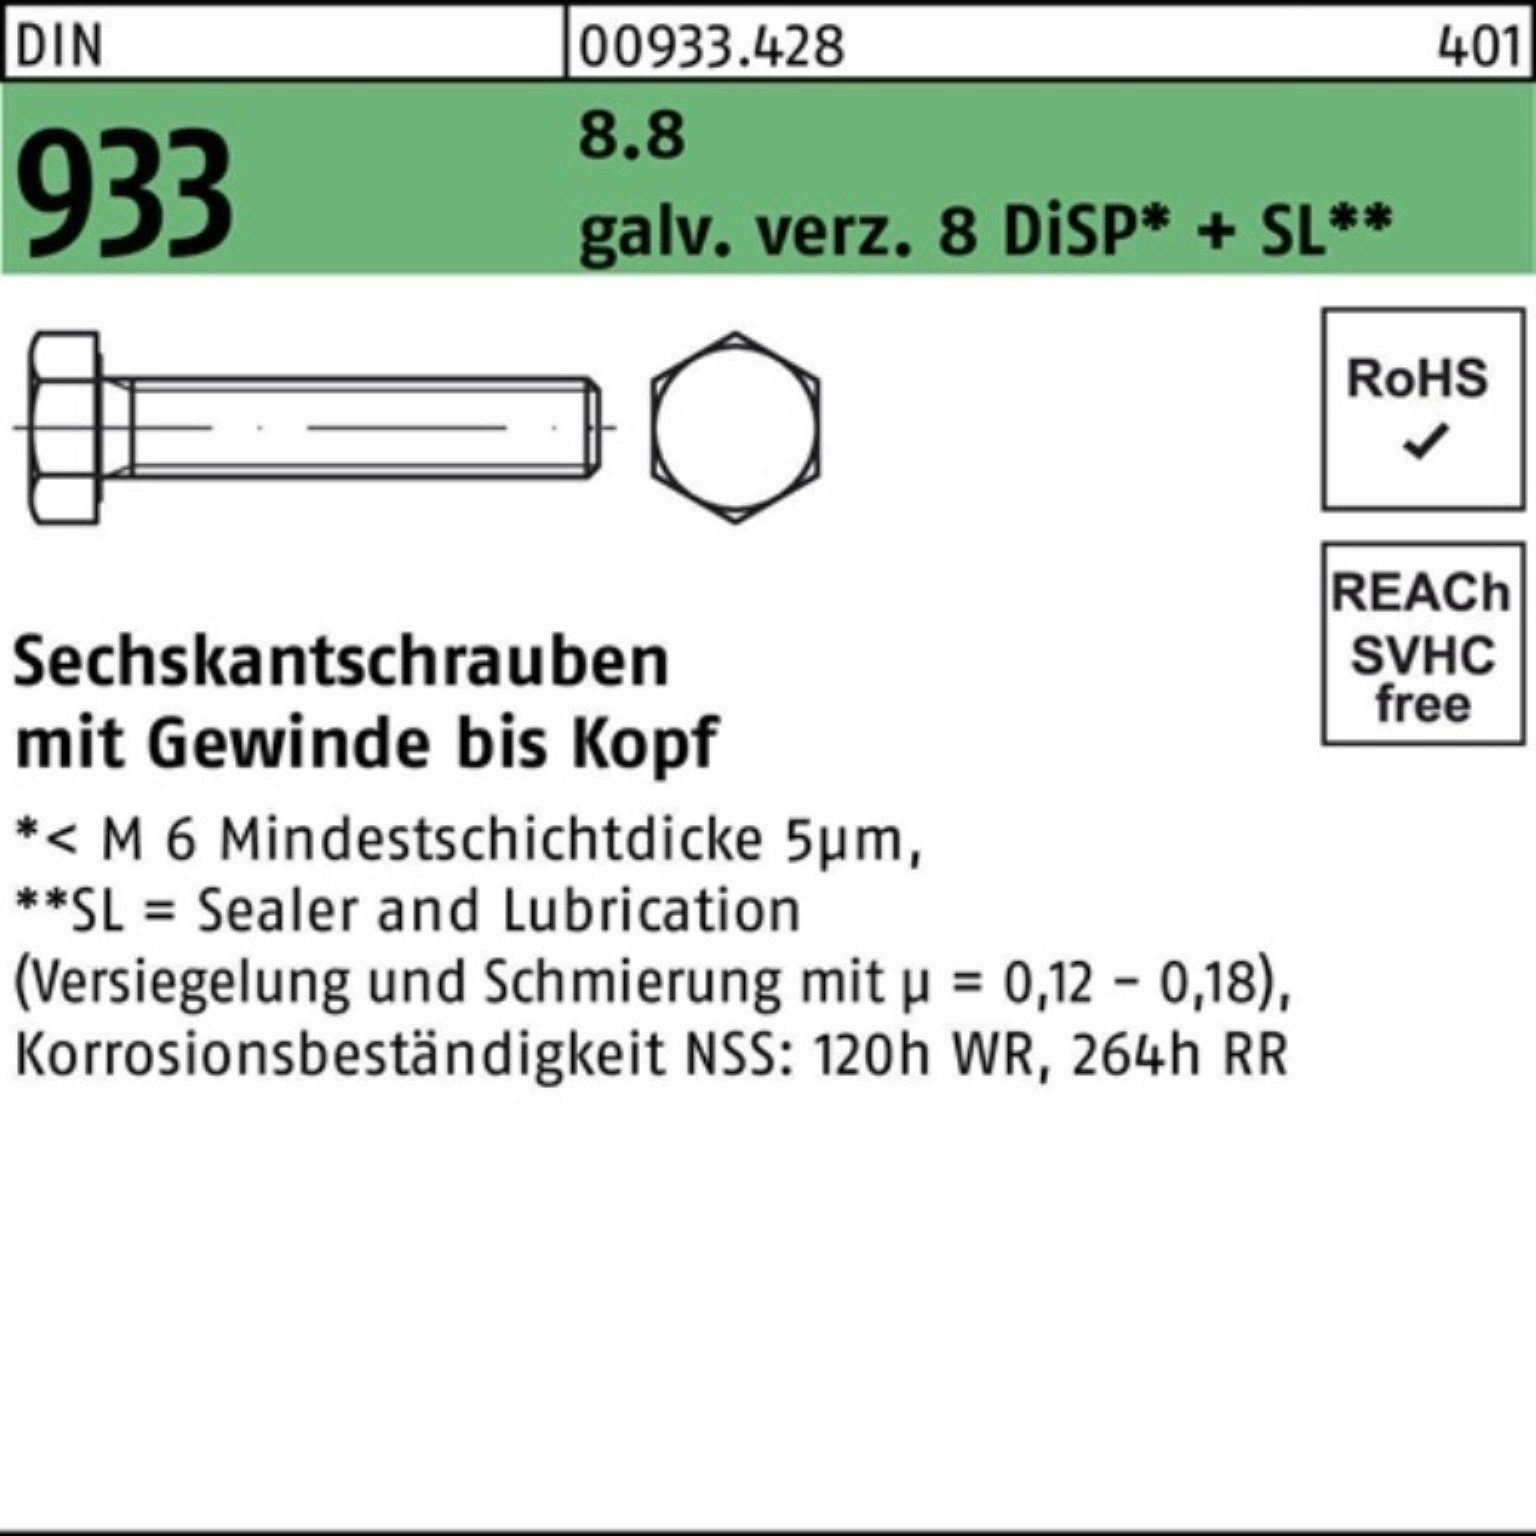 Reyher Sechskantschraube 100er Zn VG 8.8 933 8 Pack DIN DiSP Sechskantschraube 70 SL gal + M20x